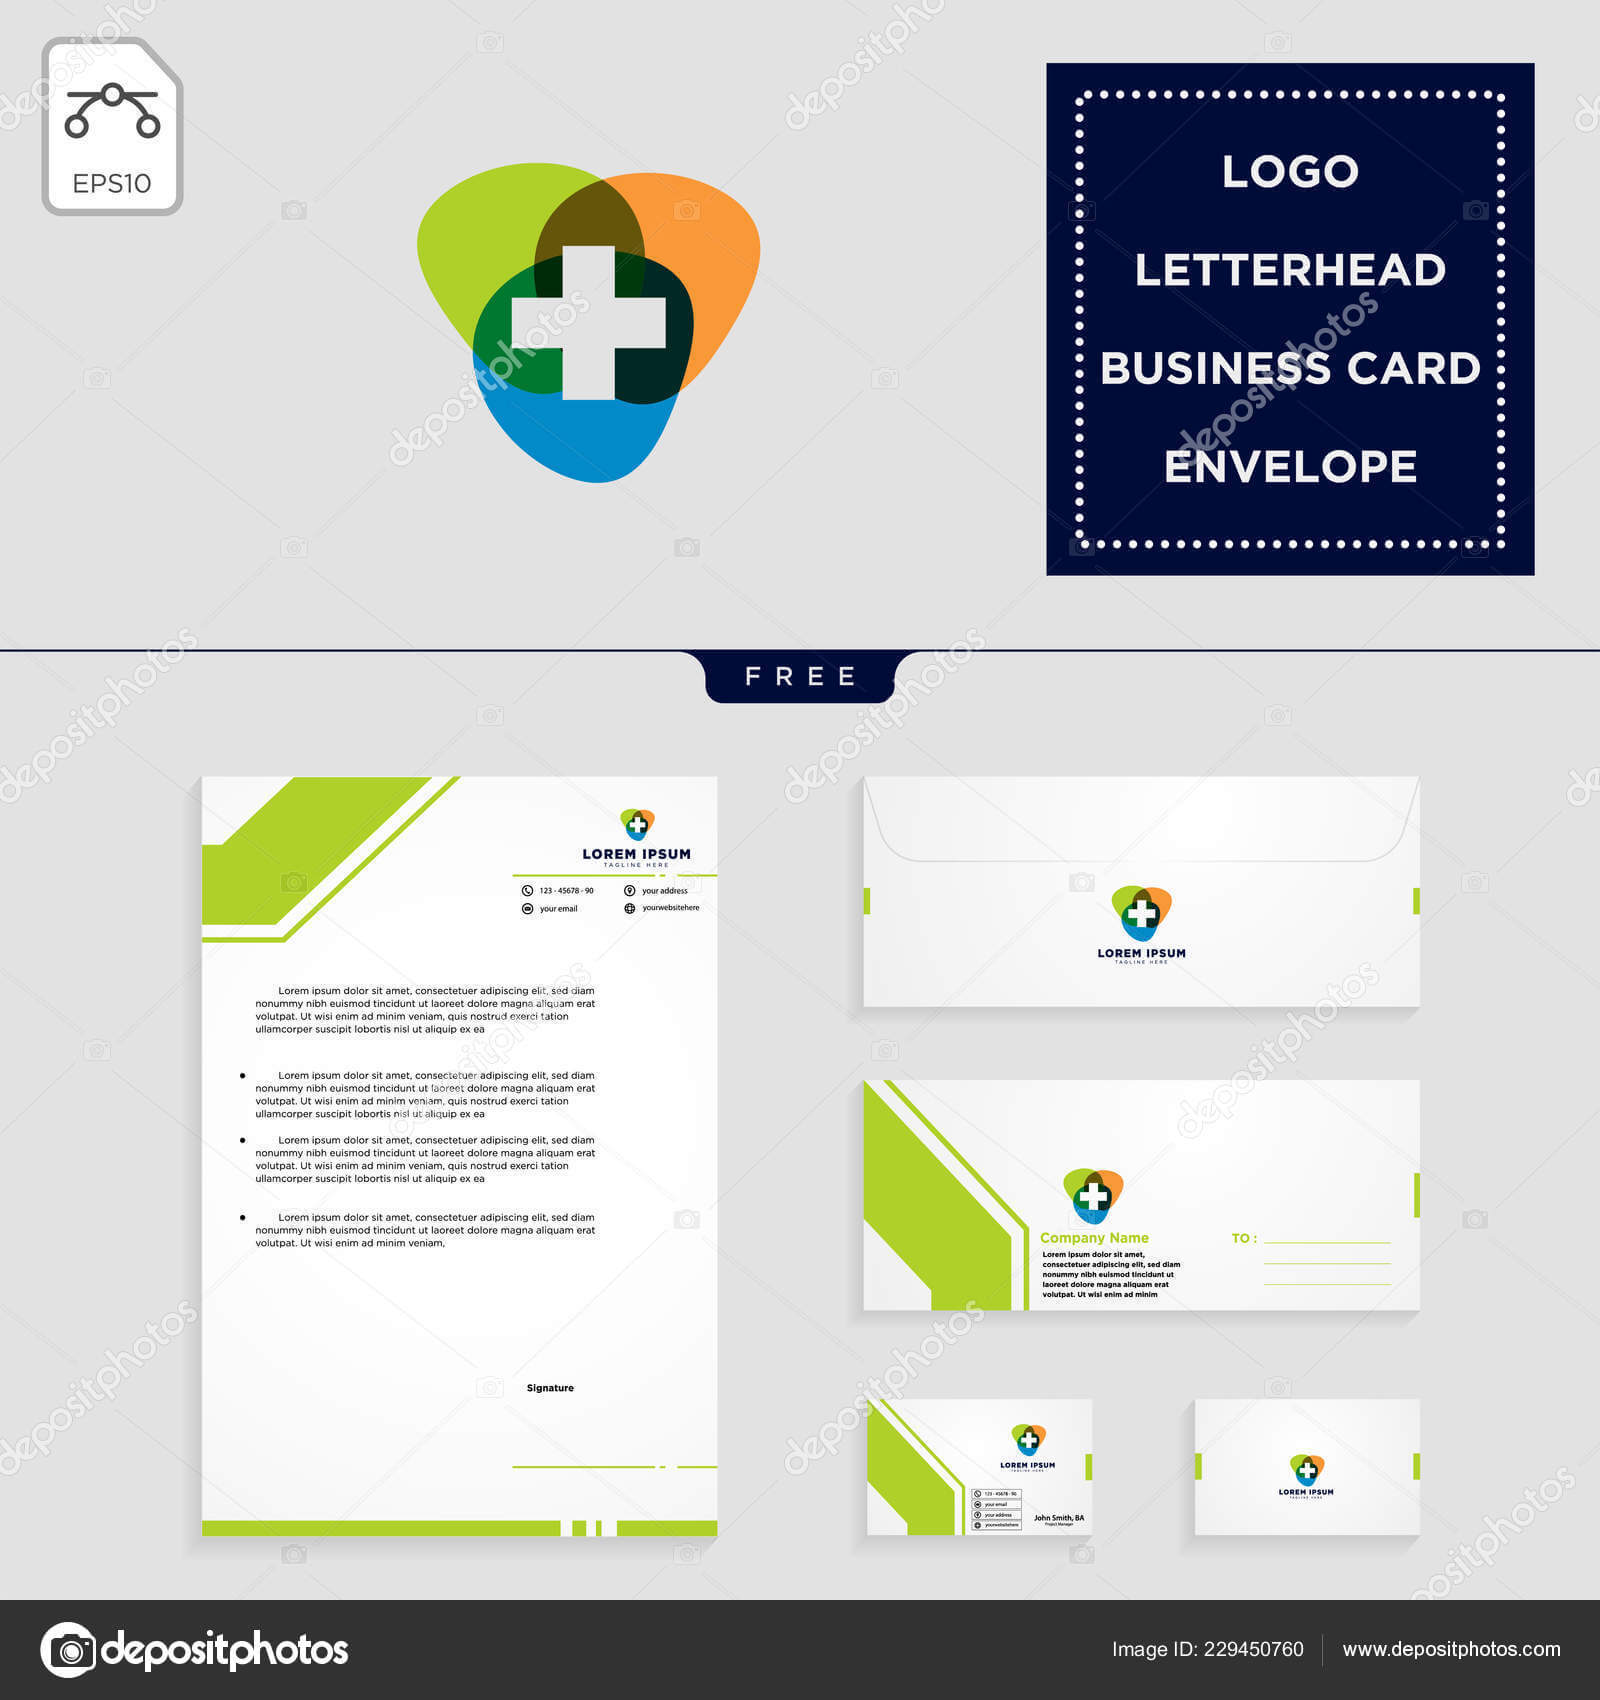 Medical Cross Logo Template Vector Illustration Free For Business Card Letterhead Envelope Template